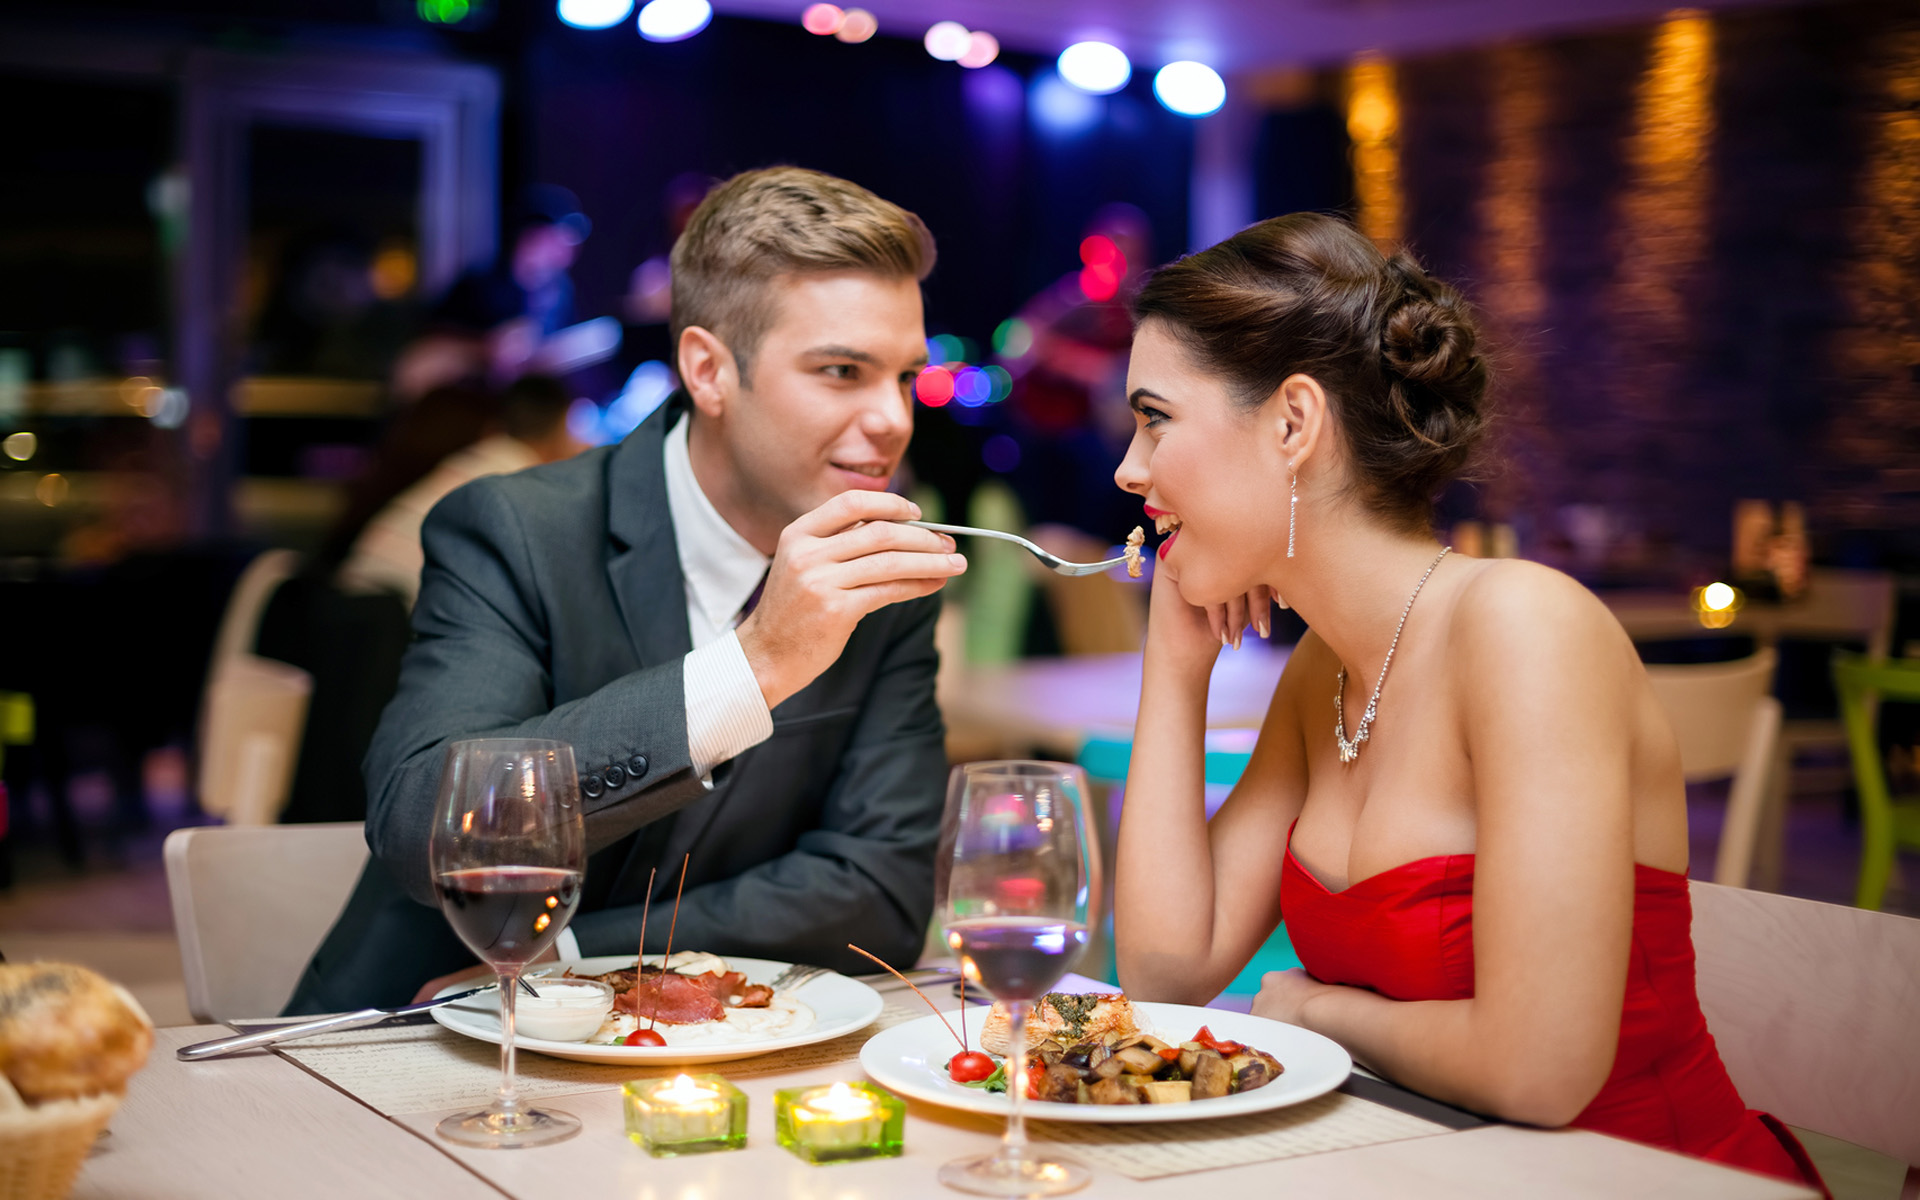 Romantic Evening With Romantic Couple In Restaurant 